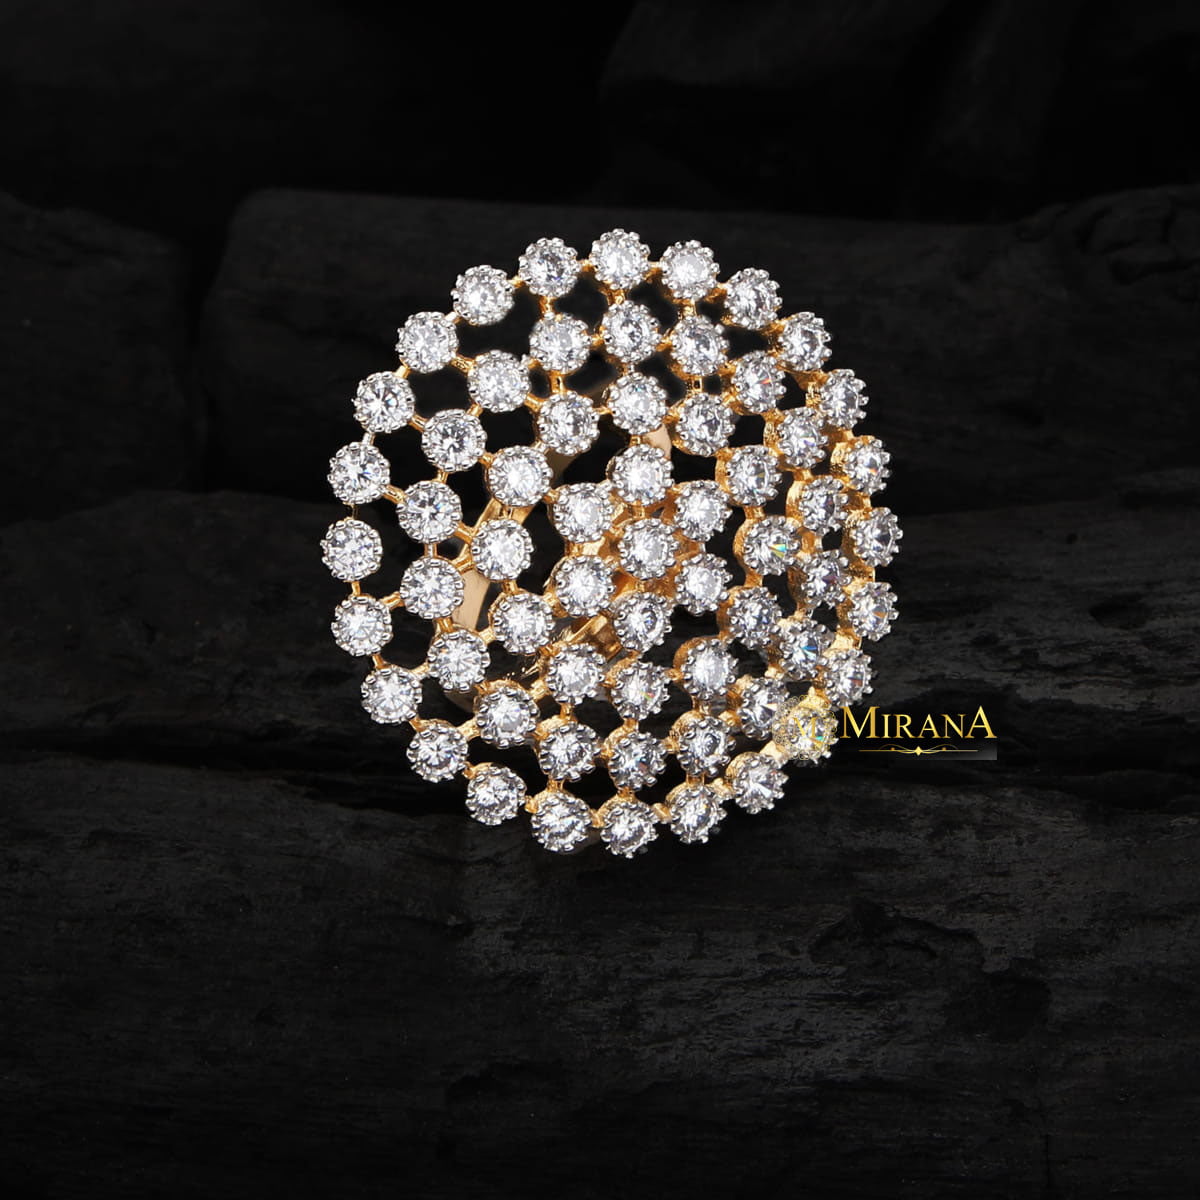 Most Elegant & Eye Catch Diamond Rings Designs For Engagement & Wedding. -  YouTube